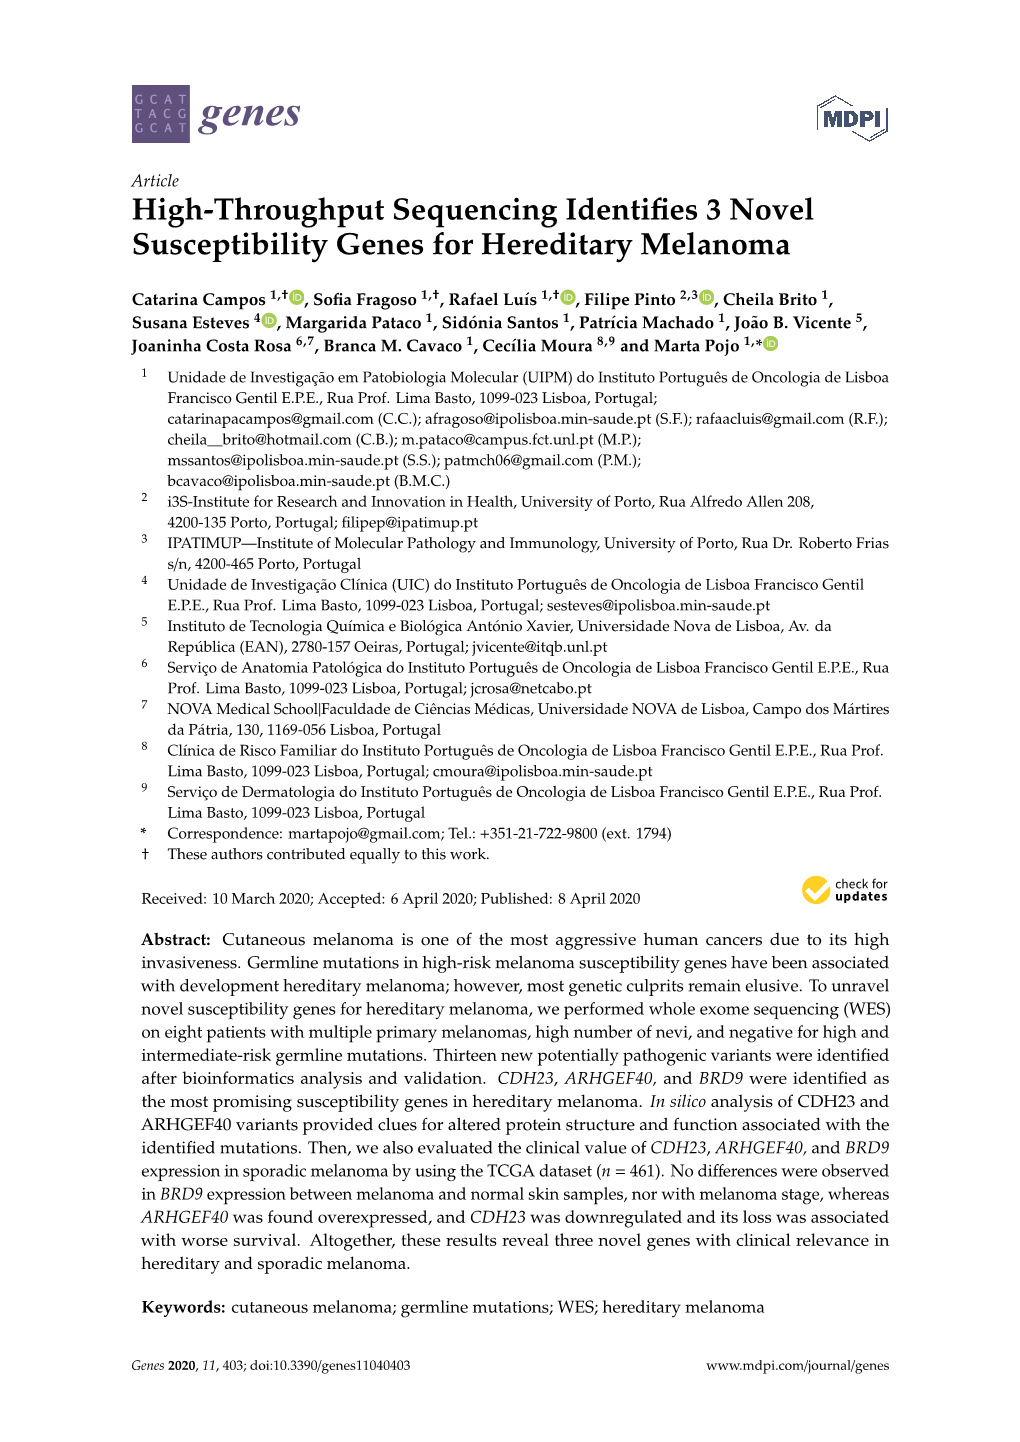 High-Throughput Sequencing Identifies 3 Novel Susceptibility